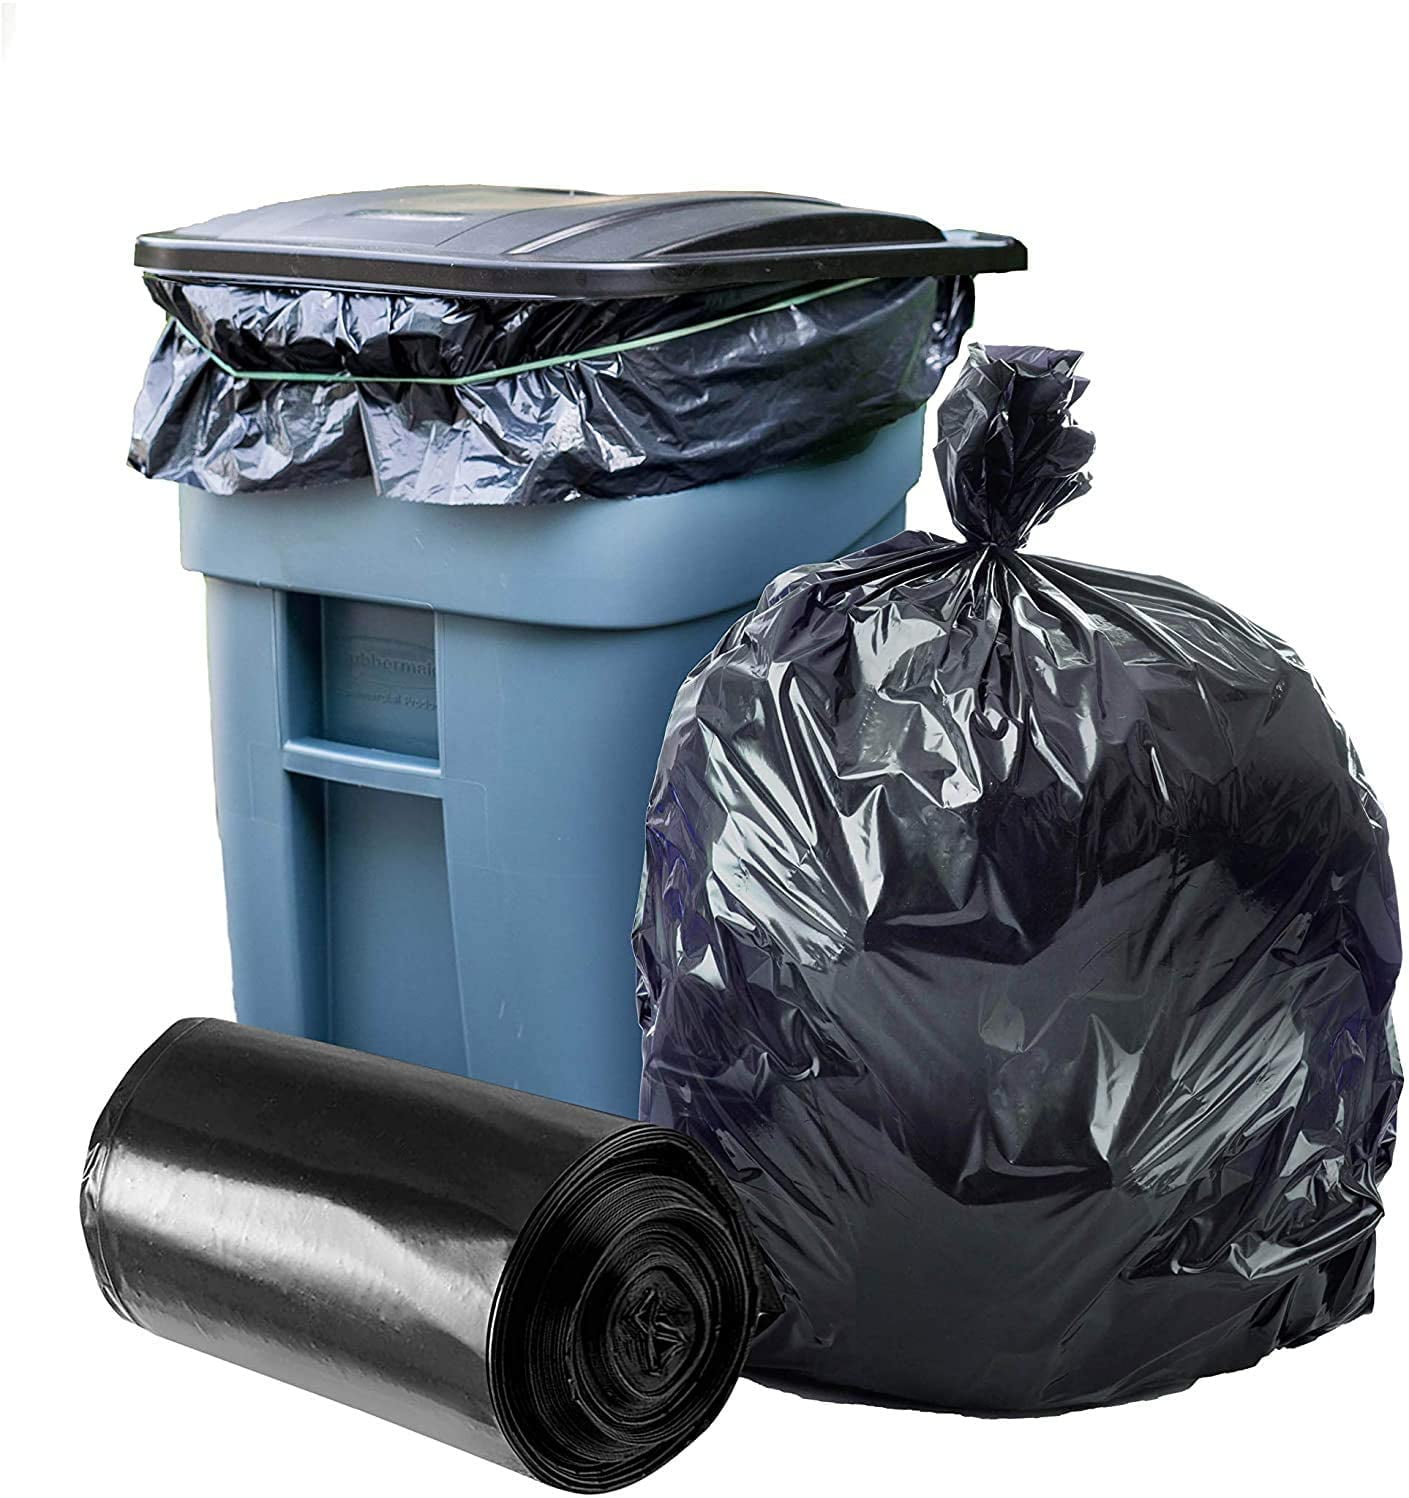 240 39 gallon Black Lawn & Leaf Garbage Trash Can Liner Bags Waste Clean Dispose 